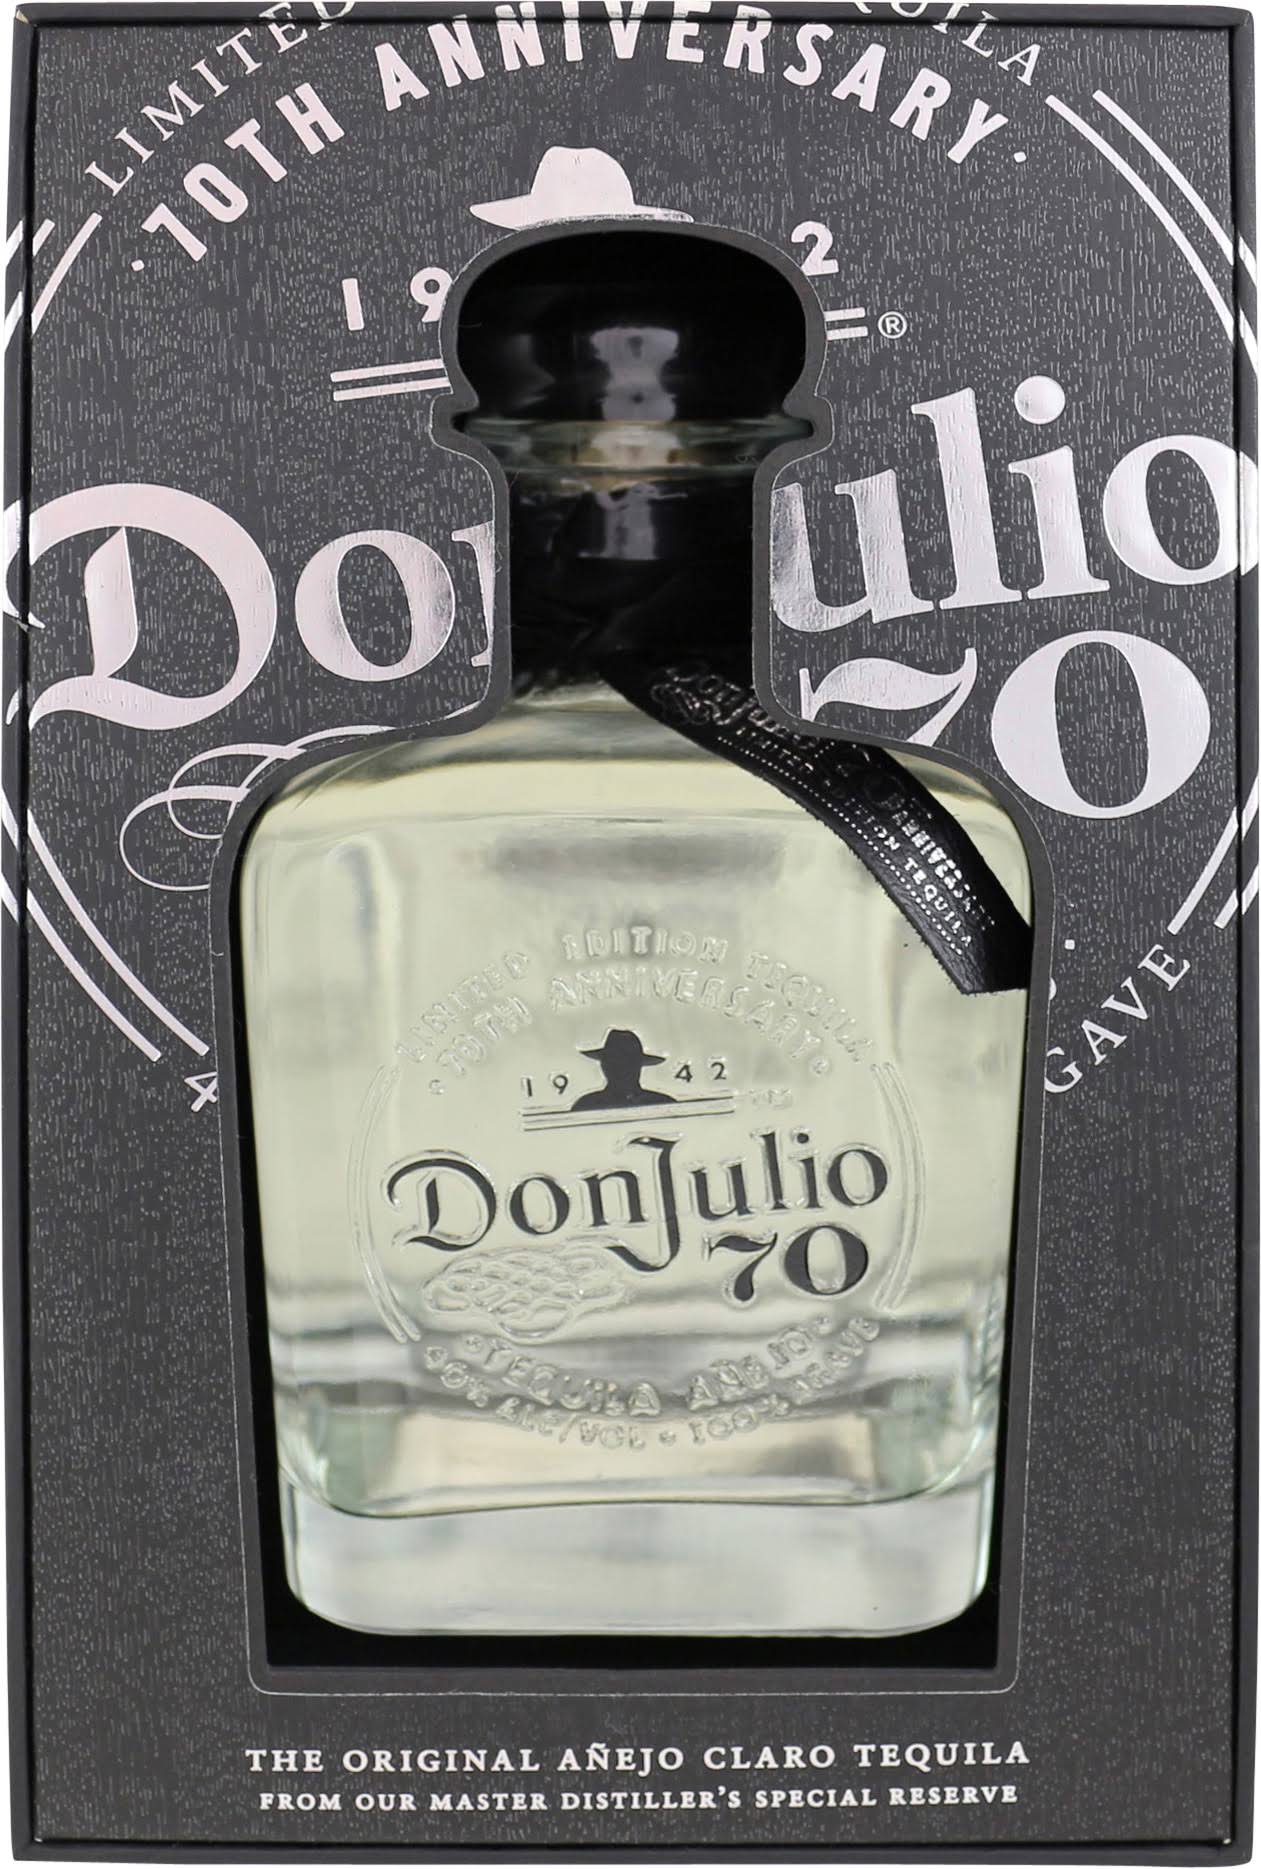 Don Julio Anejo Claro 70th Anniversary Tequila - 750 ml bottle